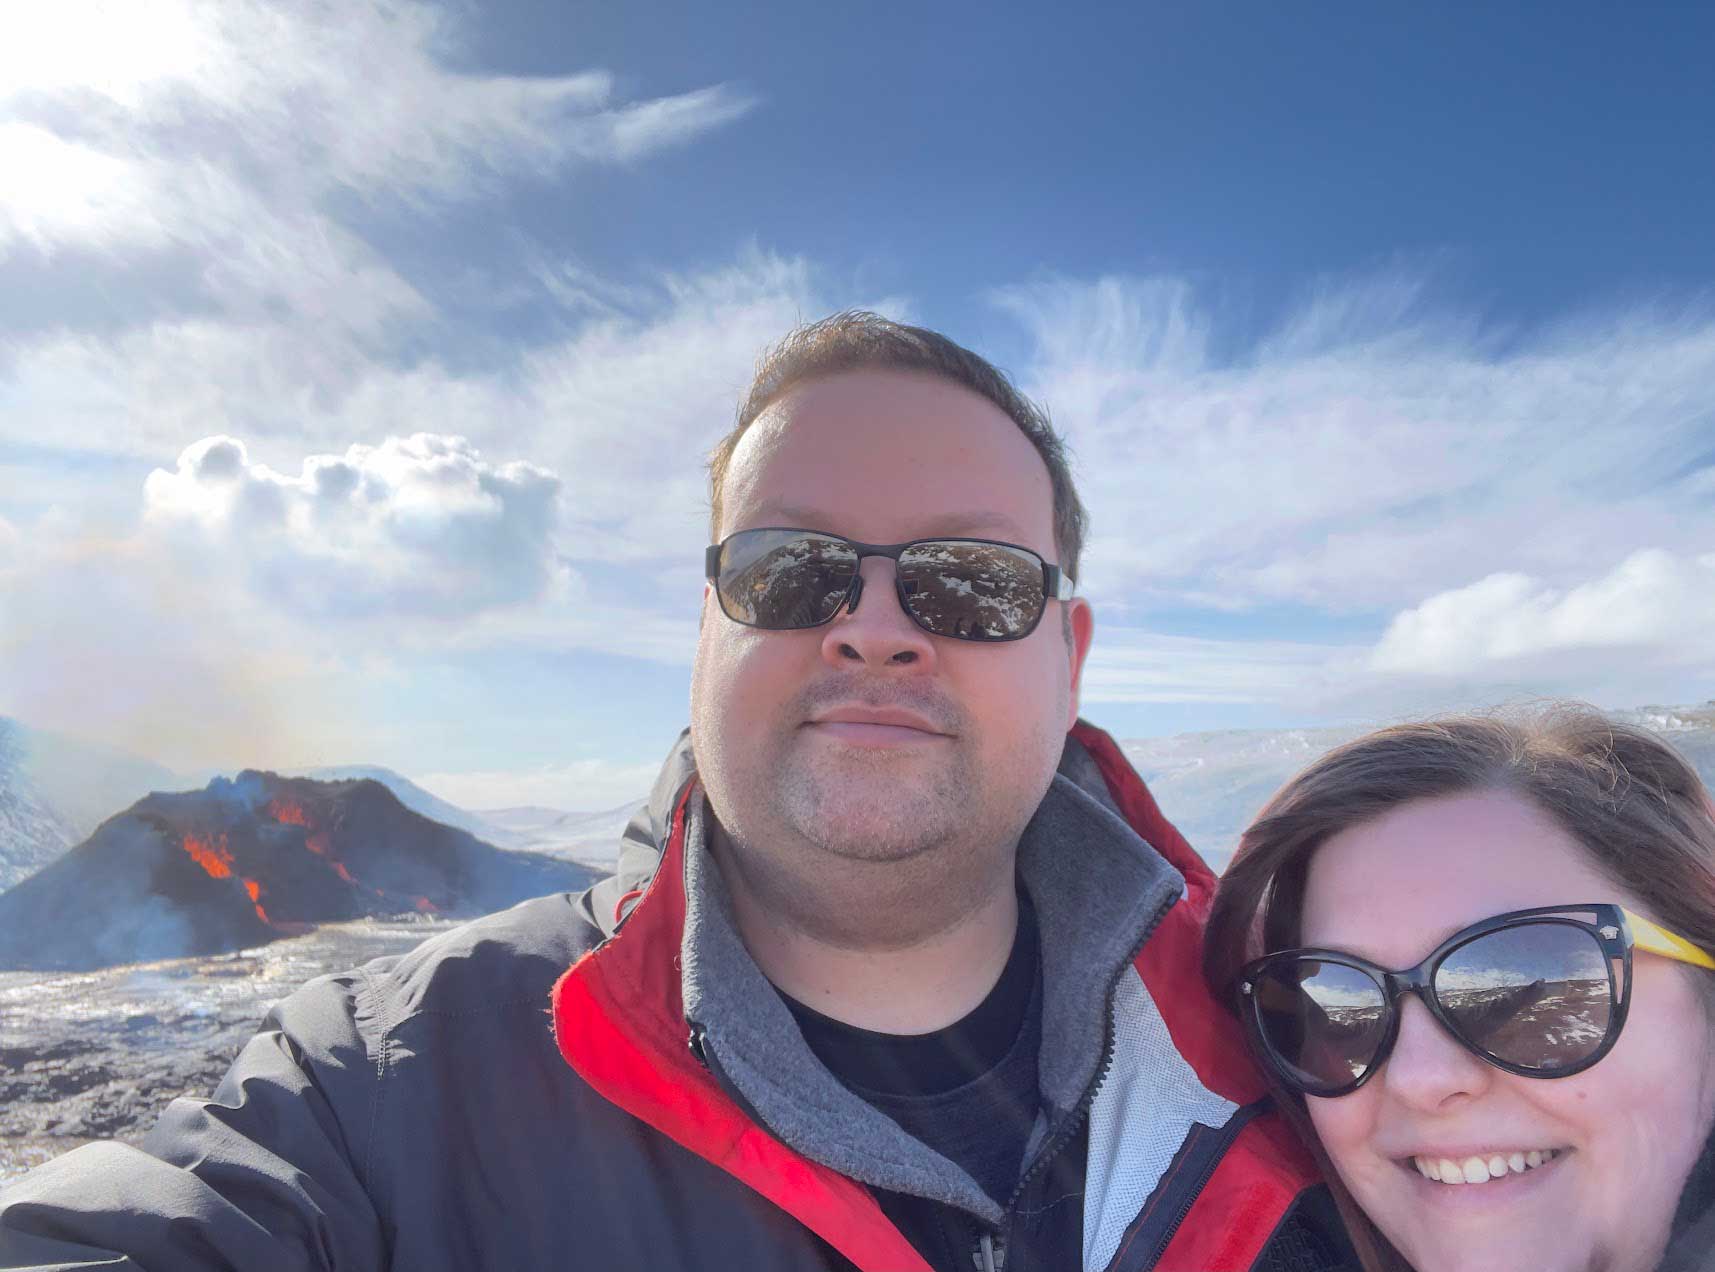 Richard and me at Fagradasfjall volcano, during the eruption.